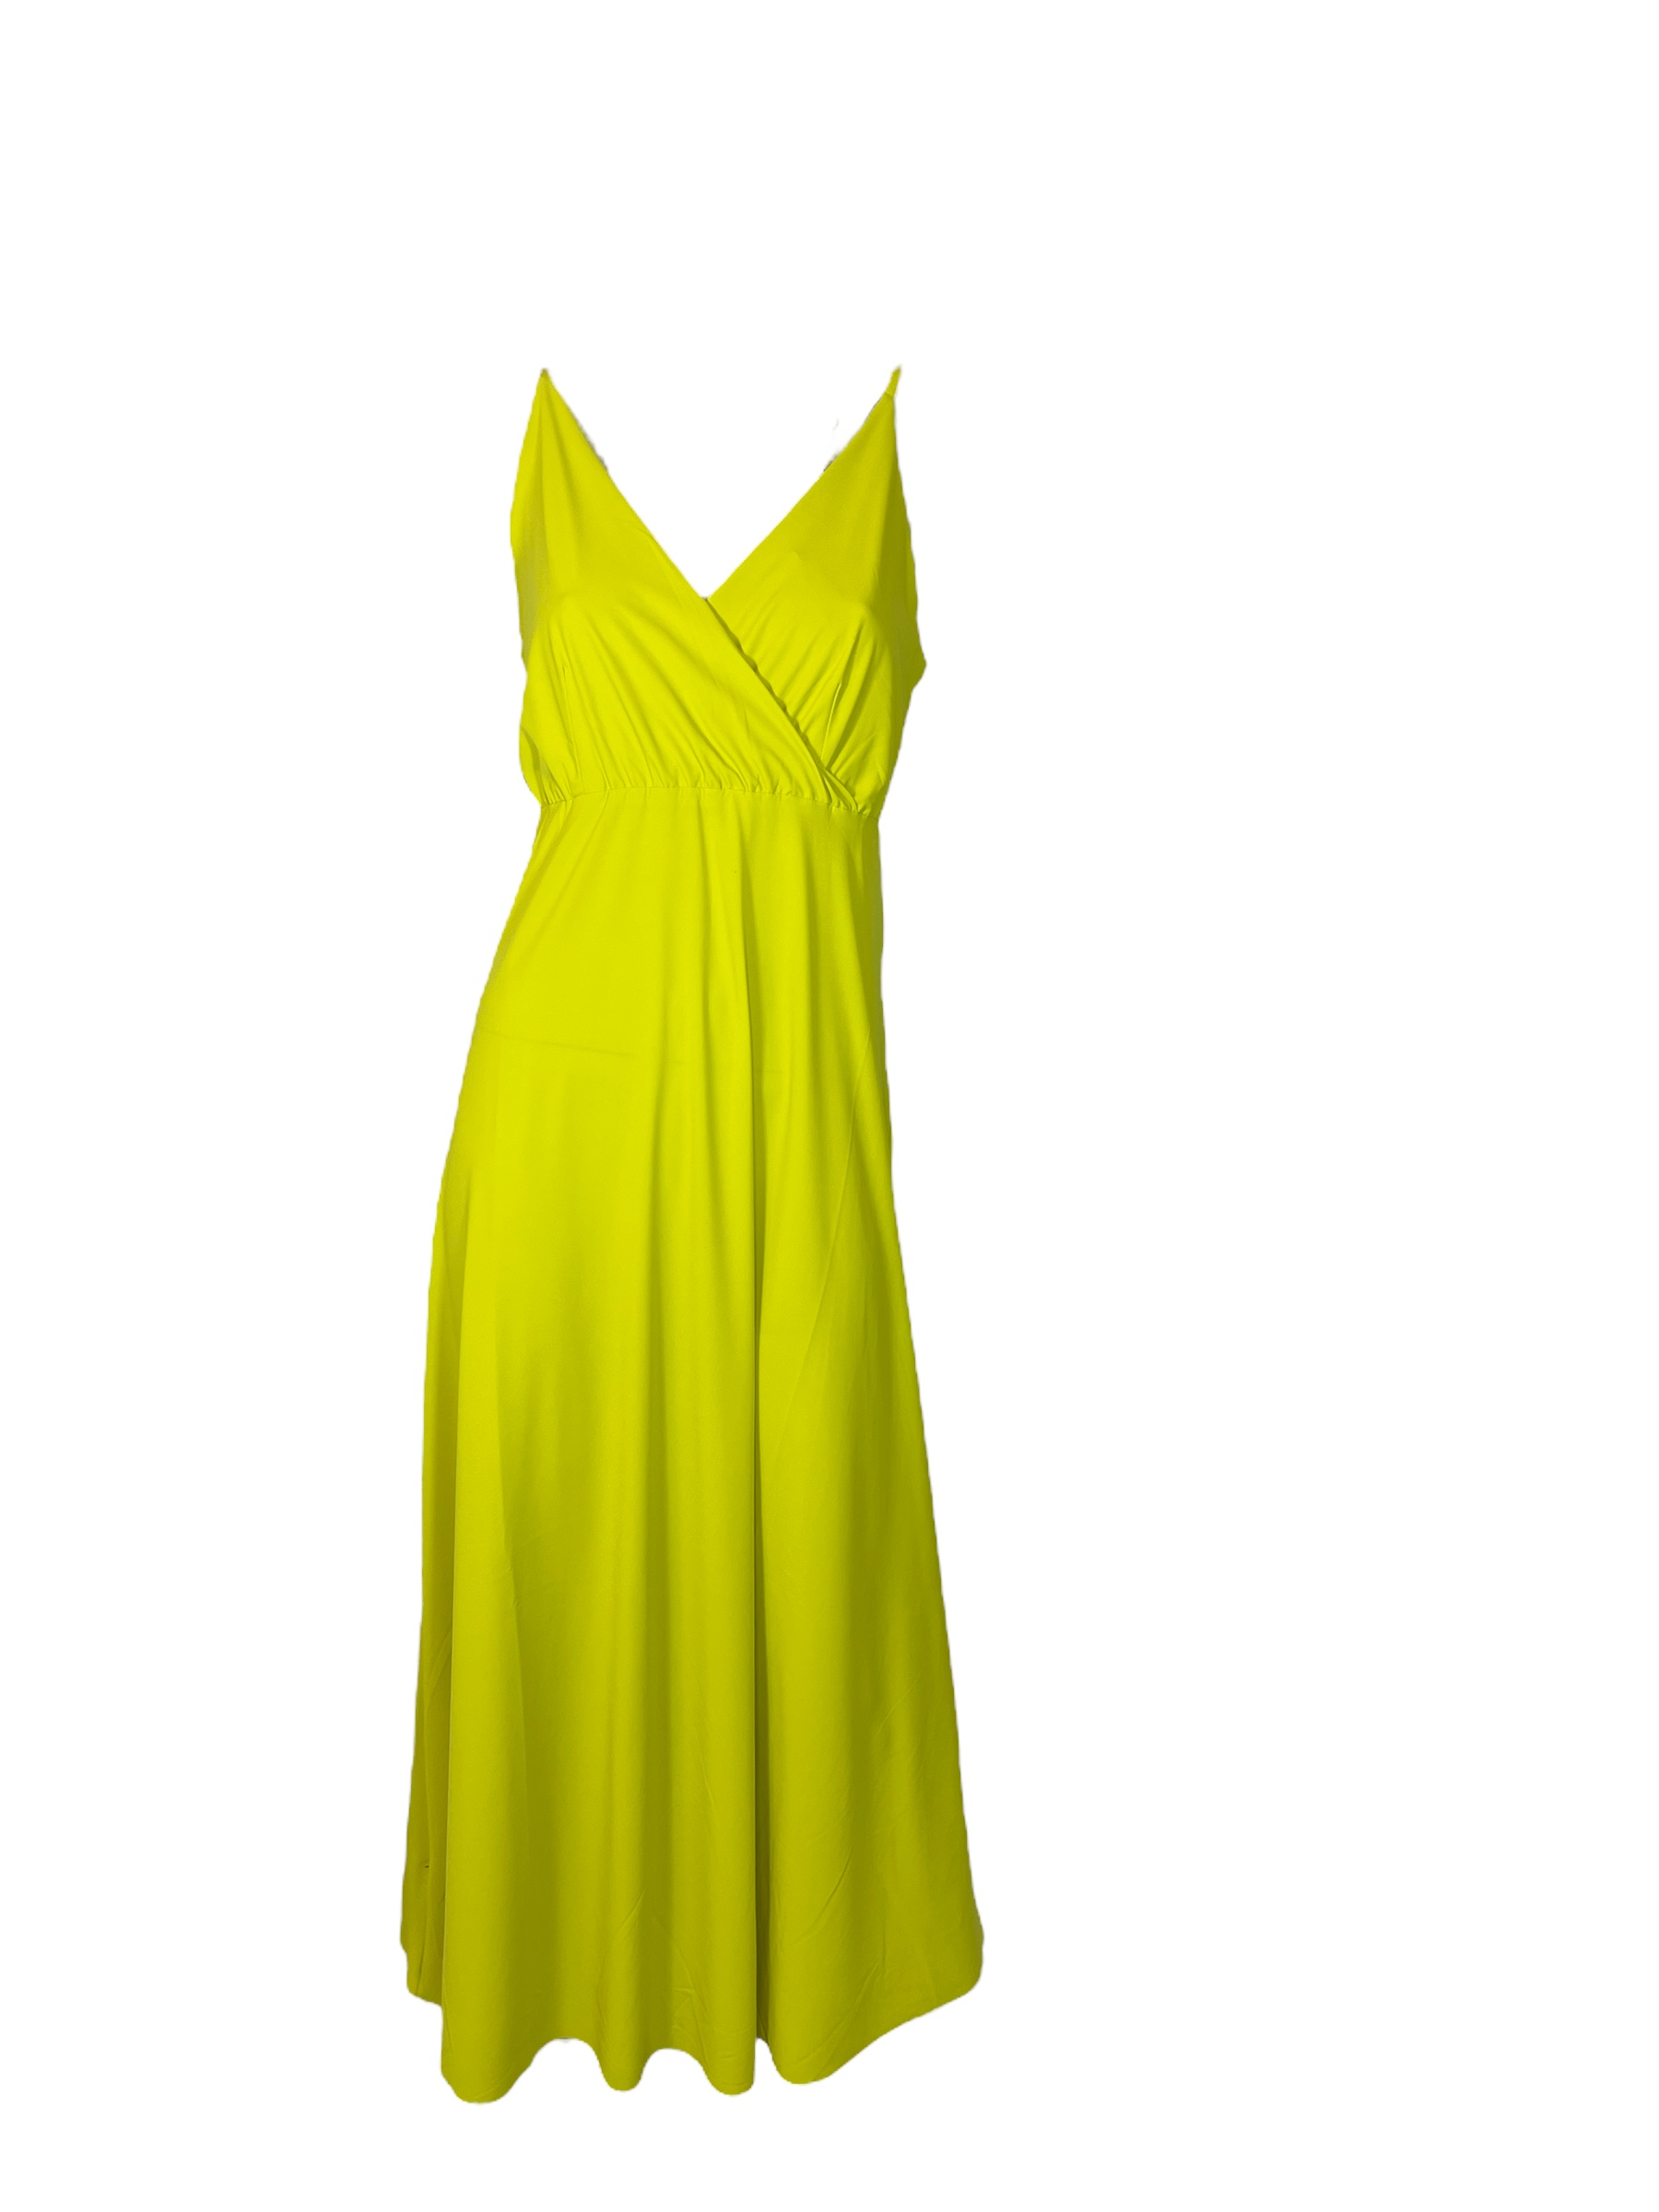 JAPAN TKY LARKIE Damen Kleid mit hohem Stretchkomfort Gelb Lime